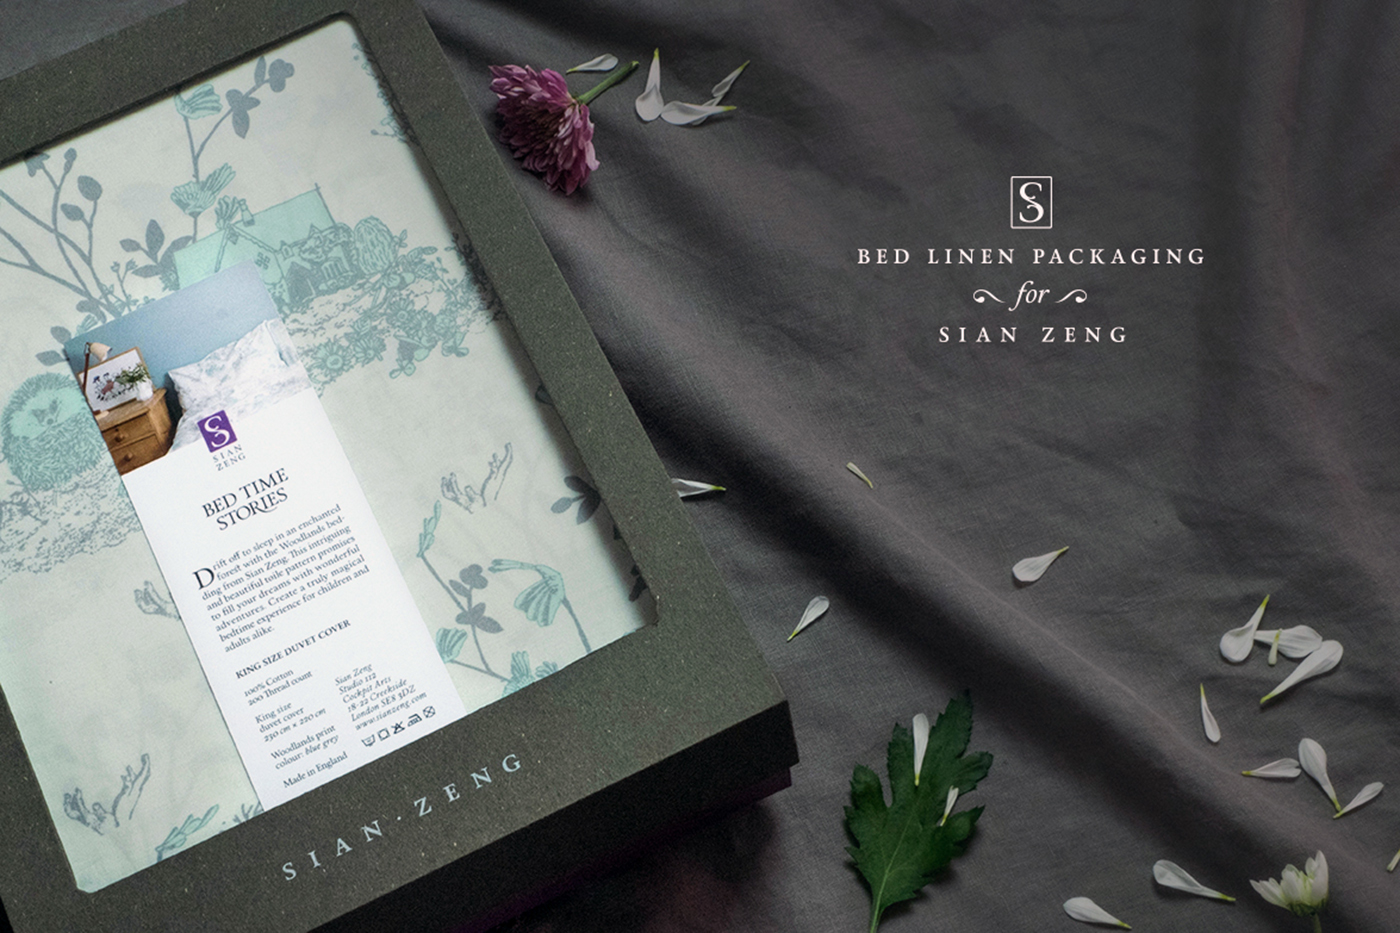 sian levente toth package design box bold luxury high end typo grey bedlinen logo ZENG 